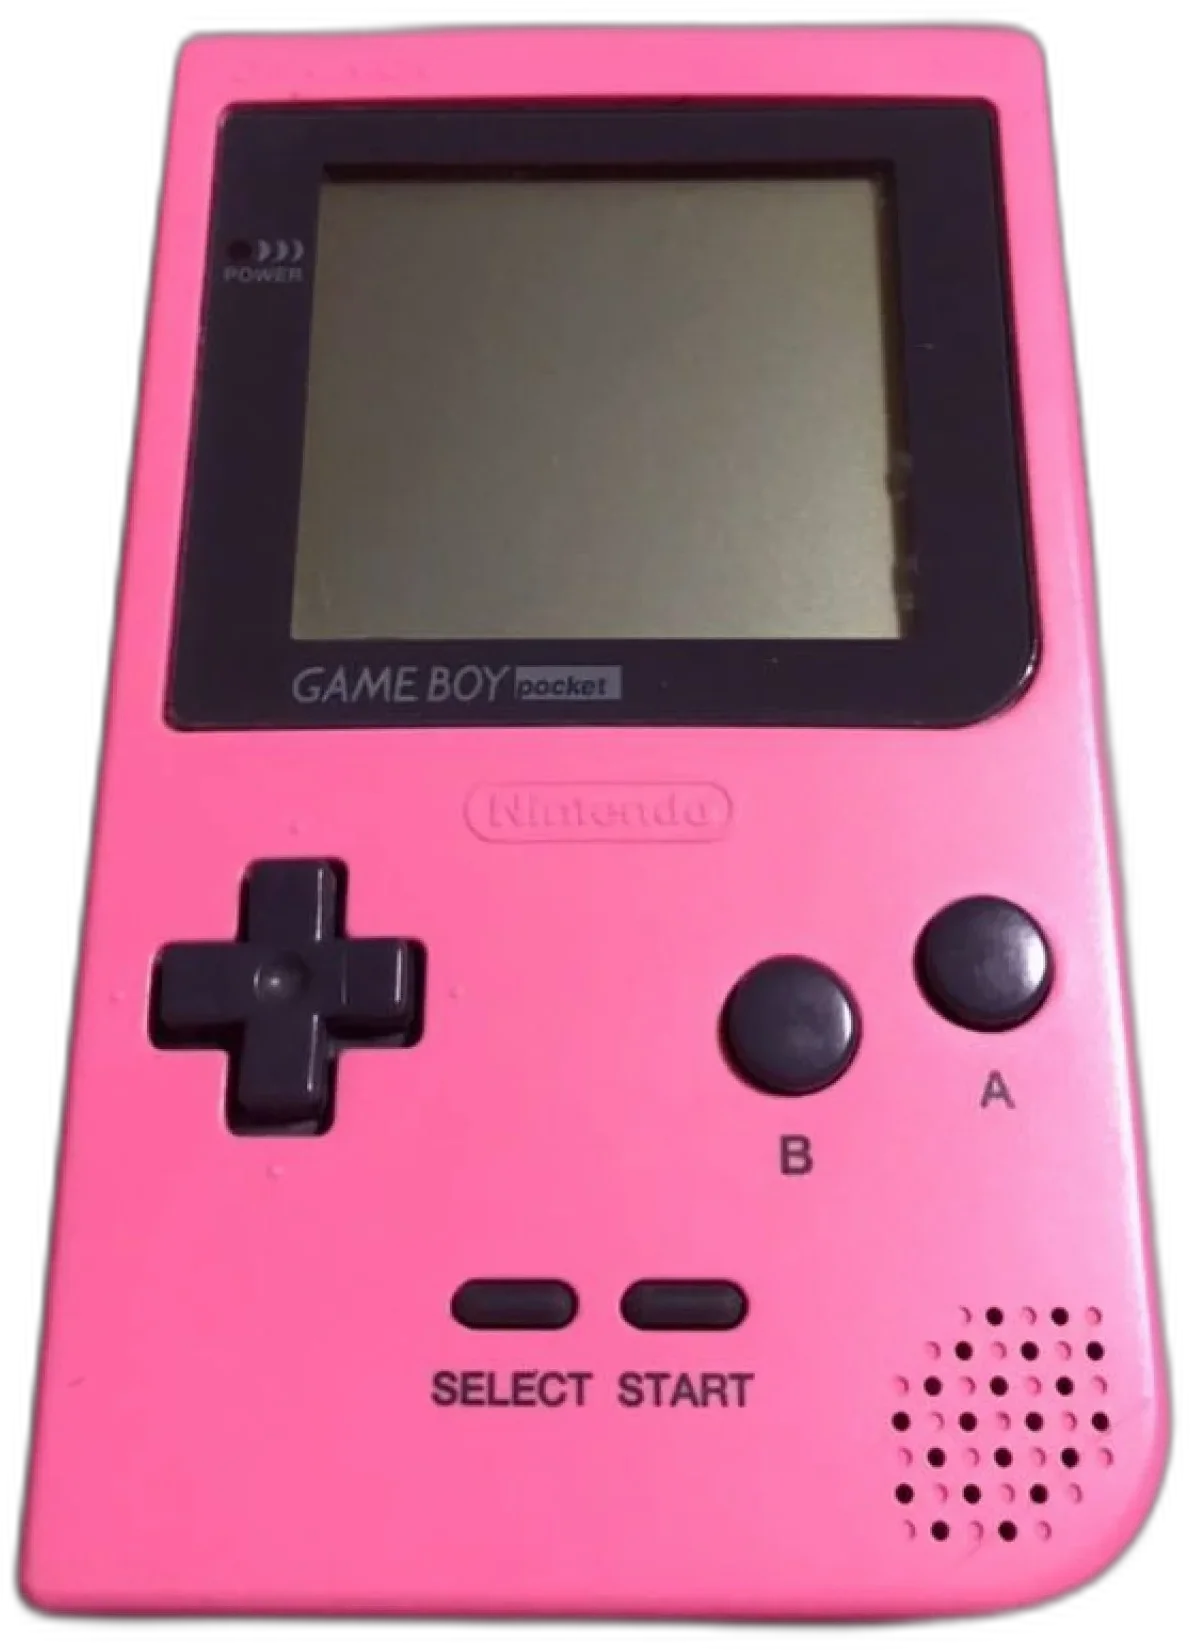  Nintendo Game Boy Pocket Pink Console [AUS]